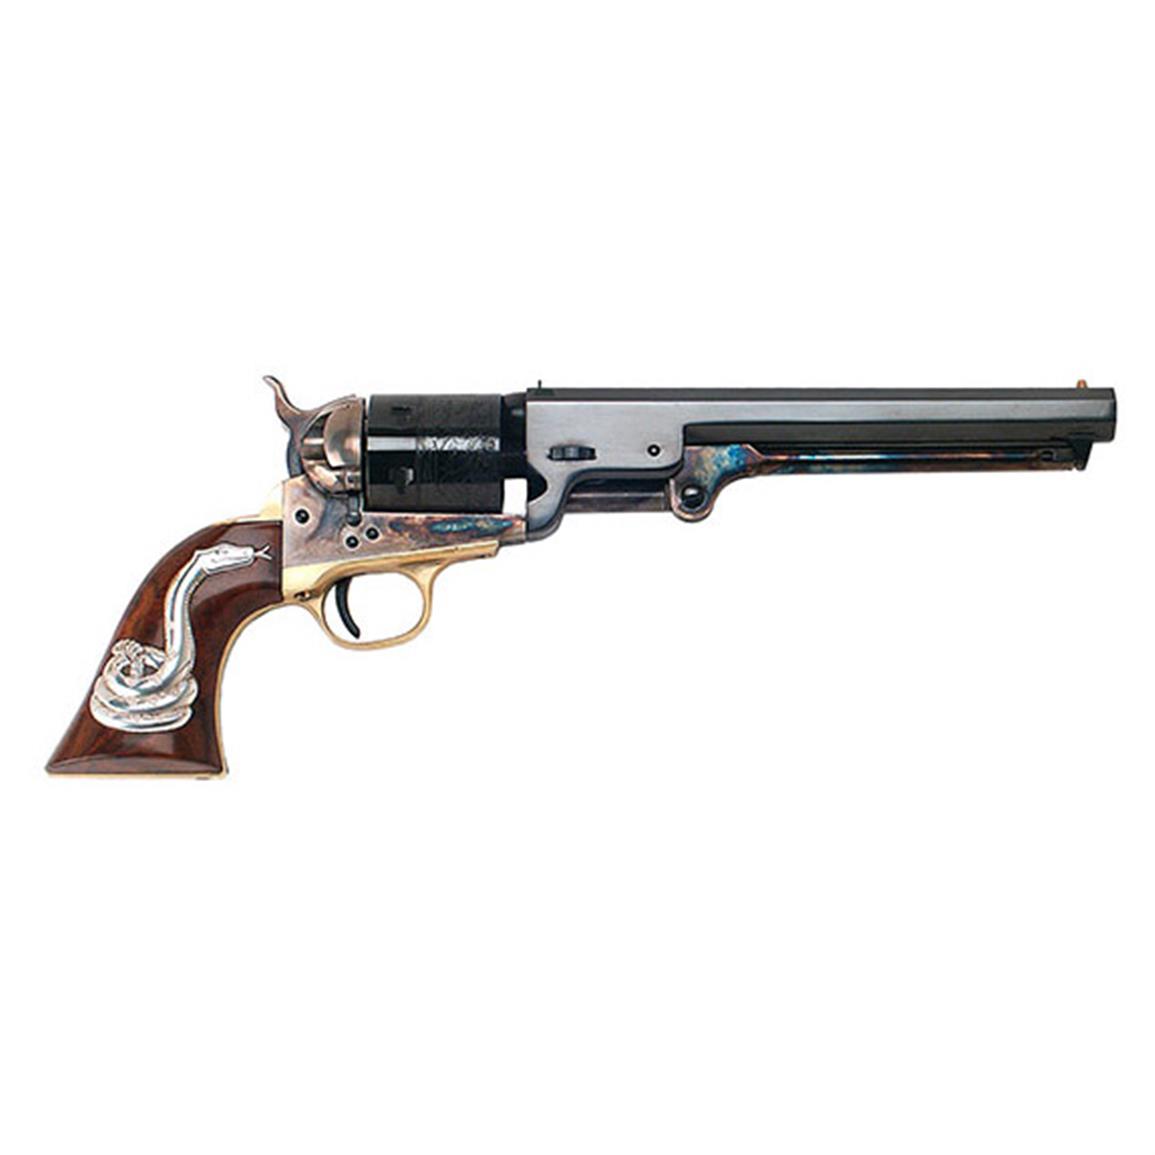 Cimarron Firearms Co. Uberti 1851 "Man with No Name", Revolver, .38 Special, 7.5" Barrel, 5 Rounds